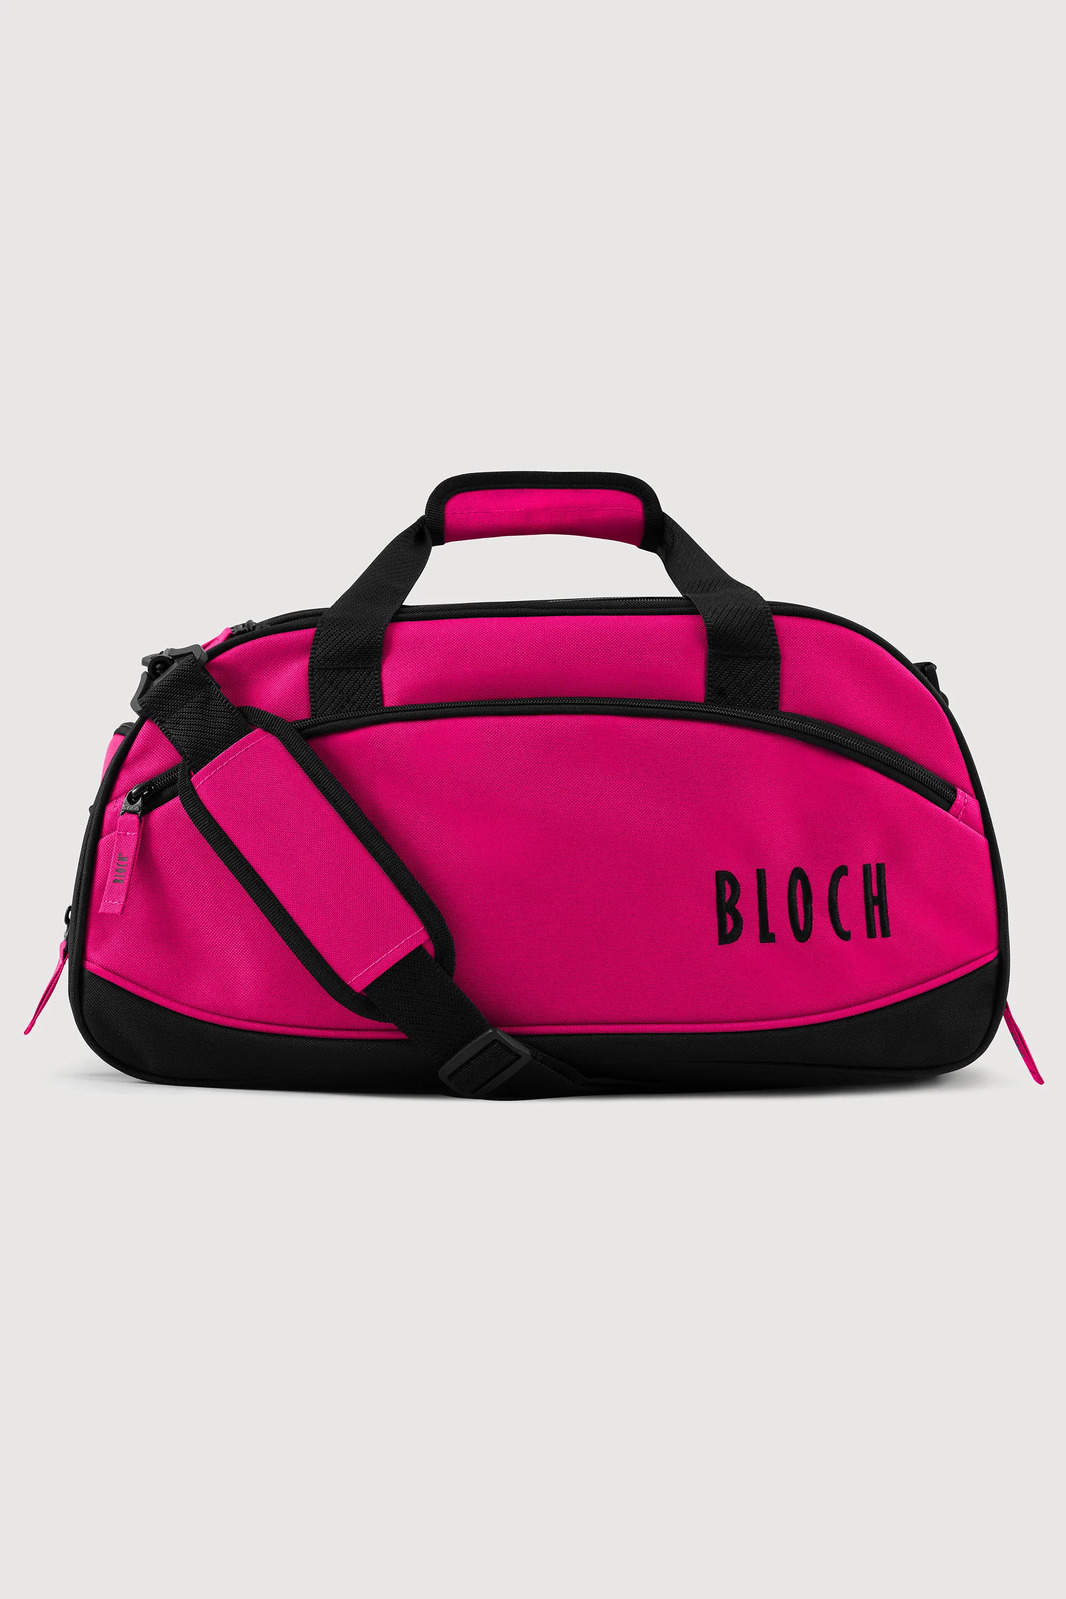 Bloch 2 Tone Dance Bag